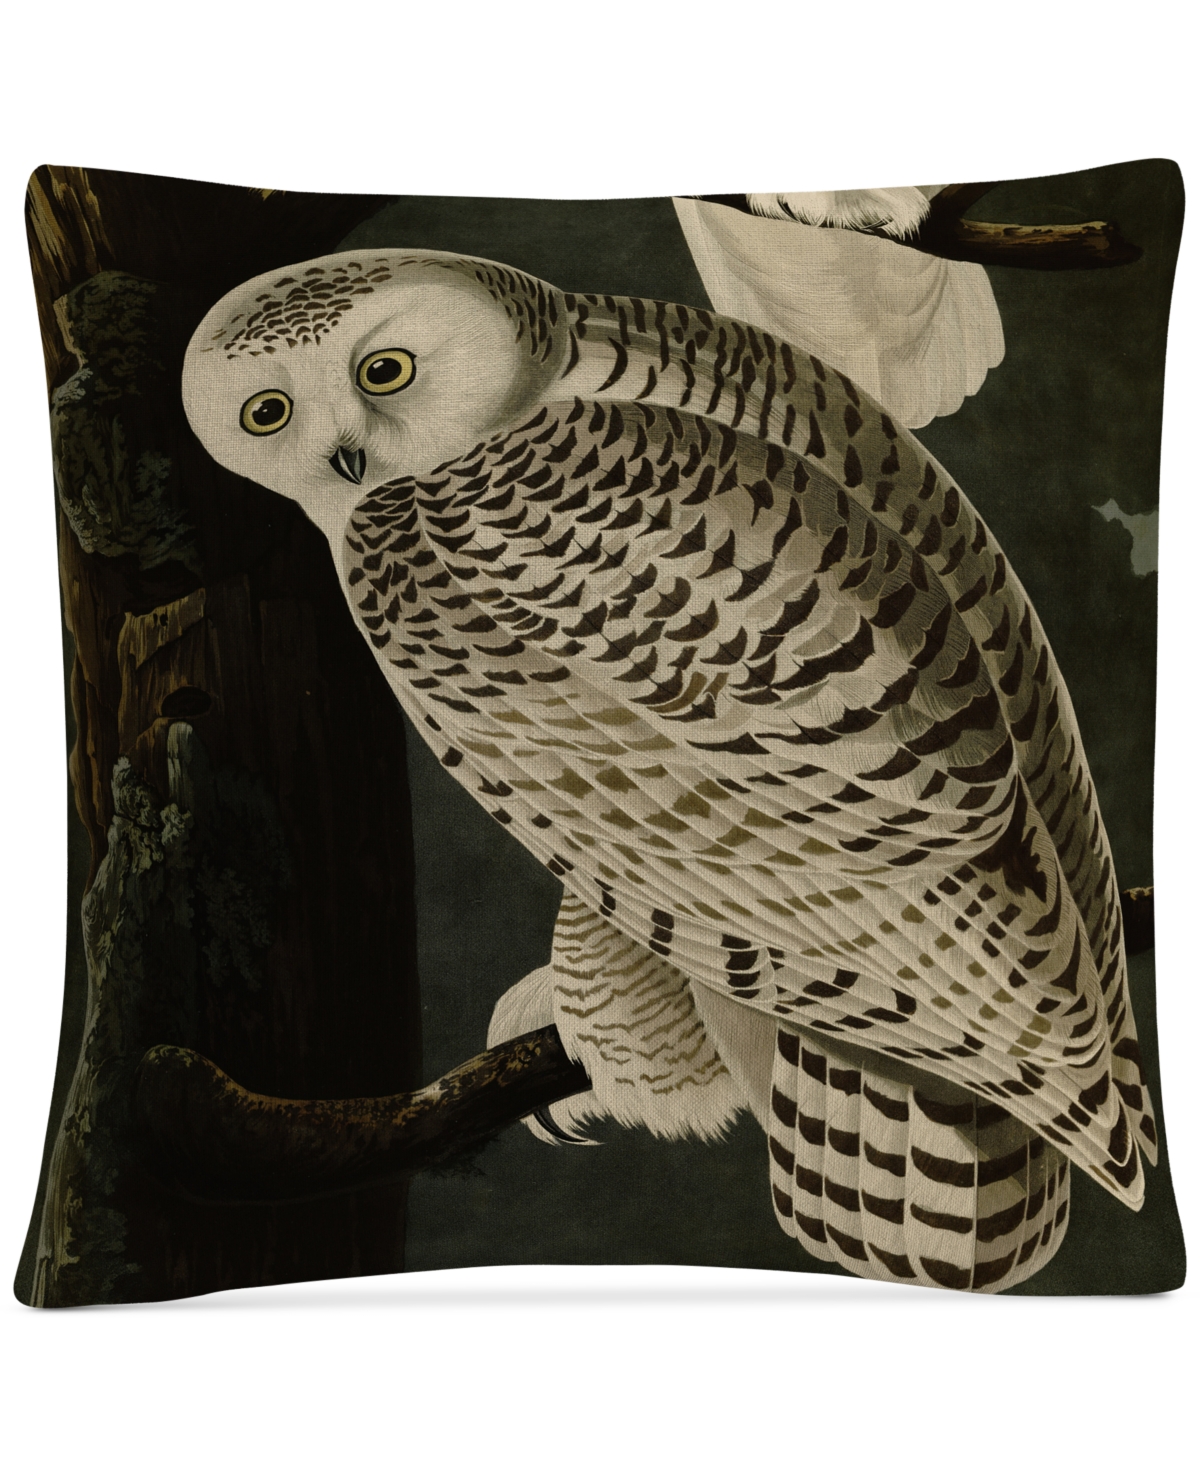 John James Audubon Snowy Owl Decorative Pillow, 16 x 16